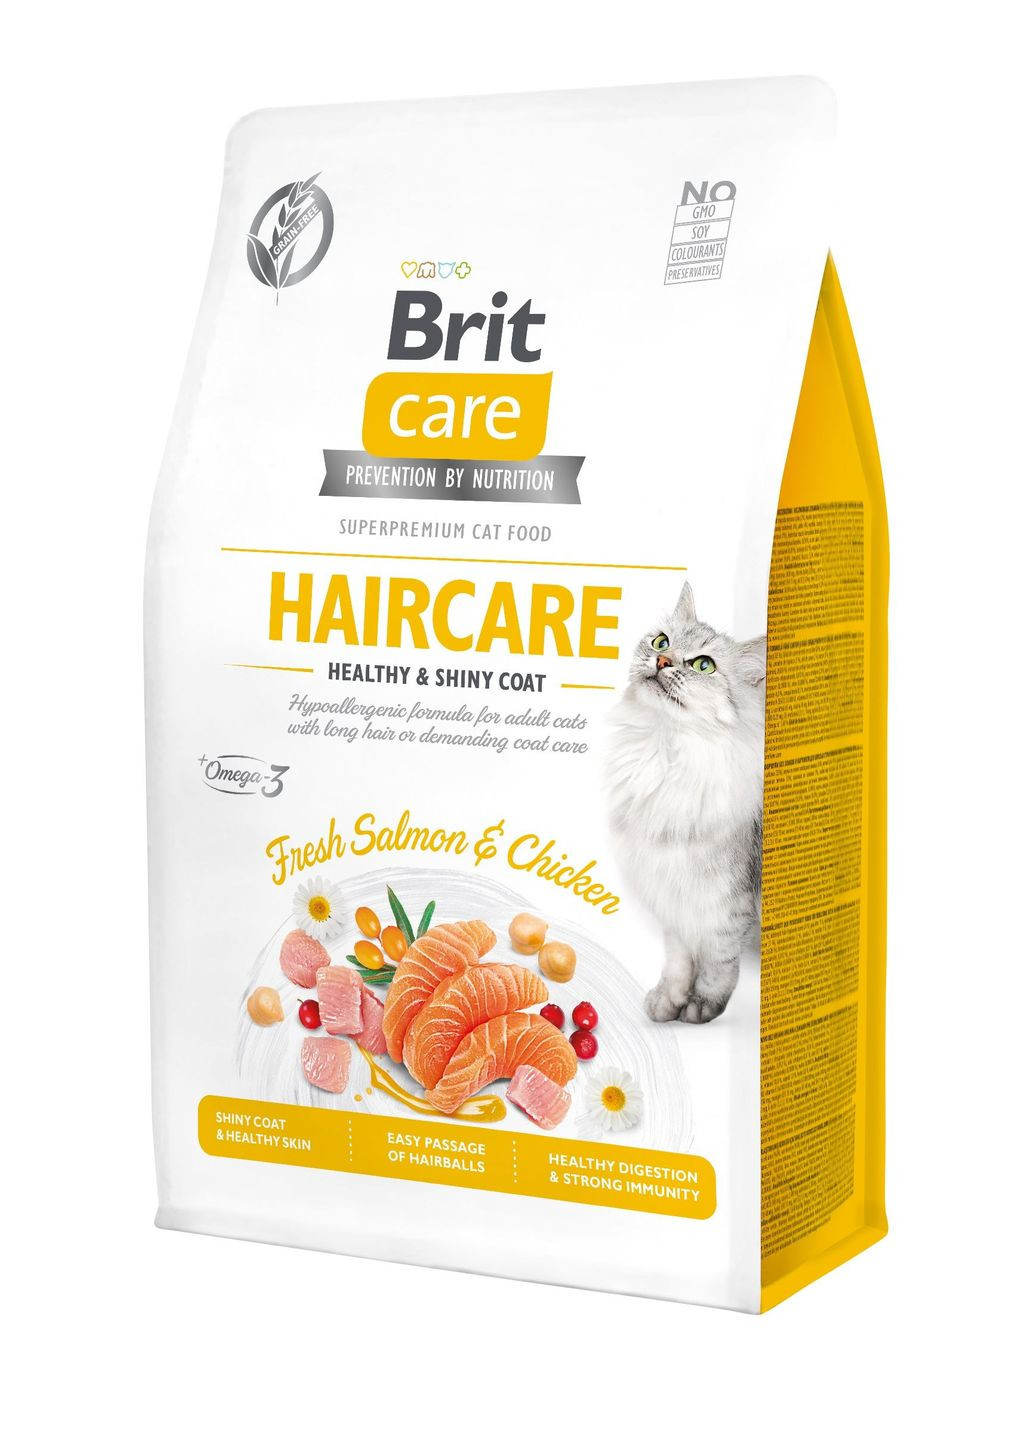 Сухой корм для кошек, требующих ухода за кожей и шерстью Cat GF Haircare Healthy& Shiny Coat с Brit Care (279566404)